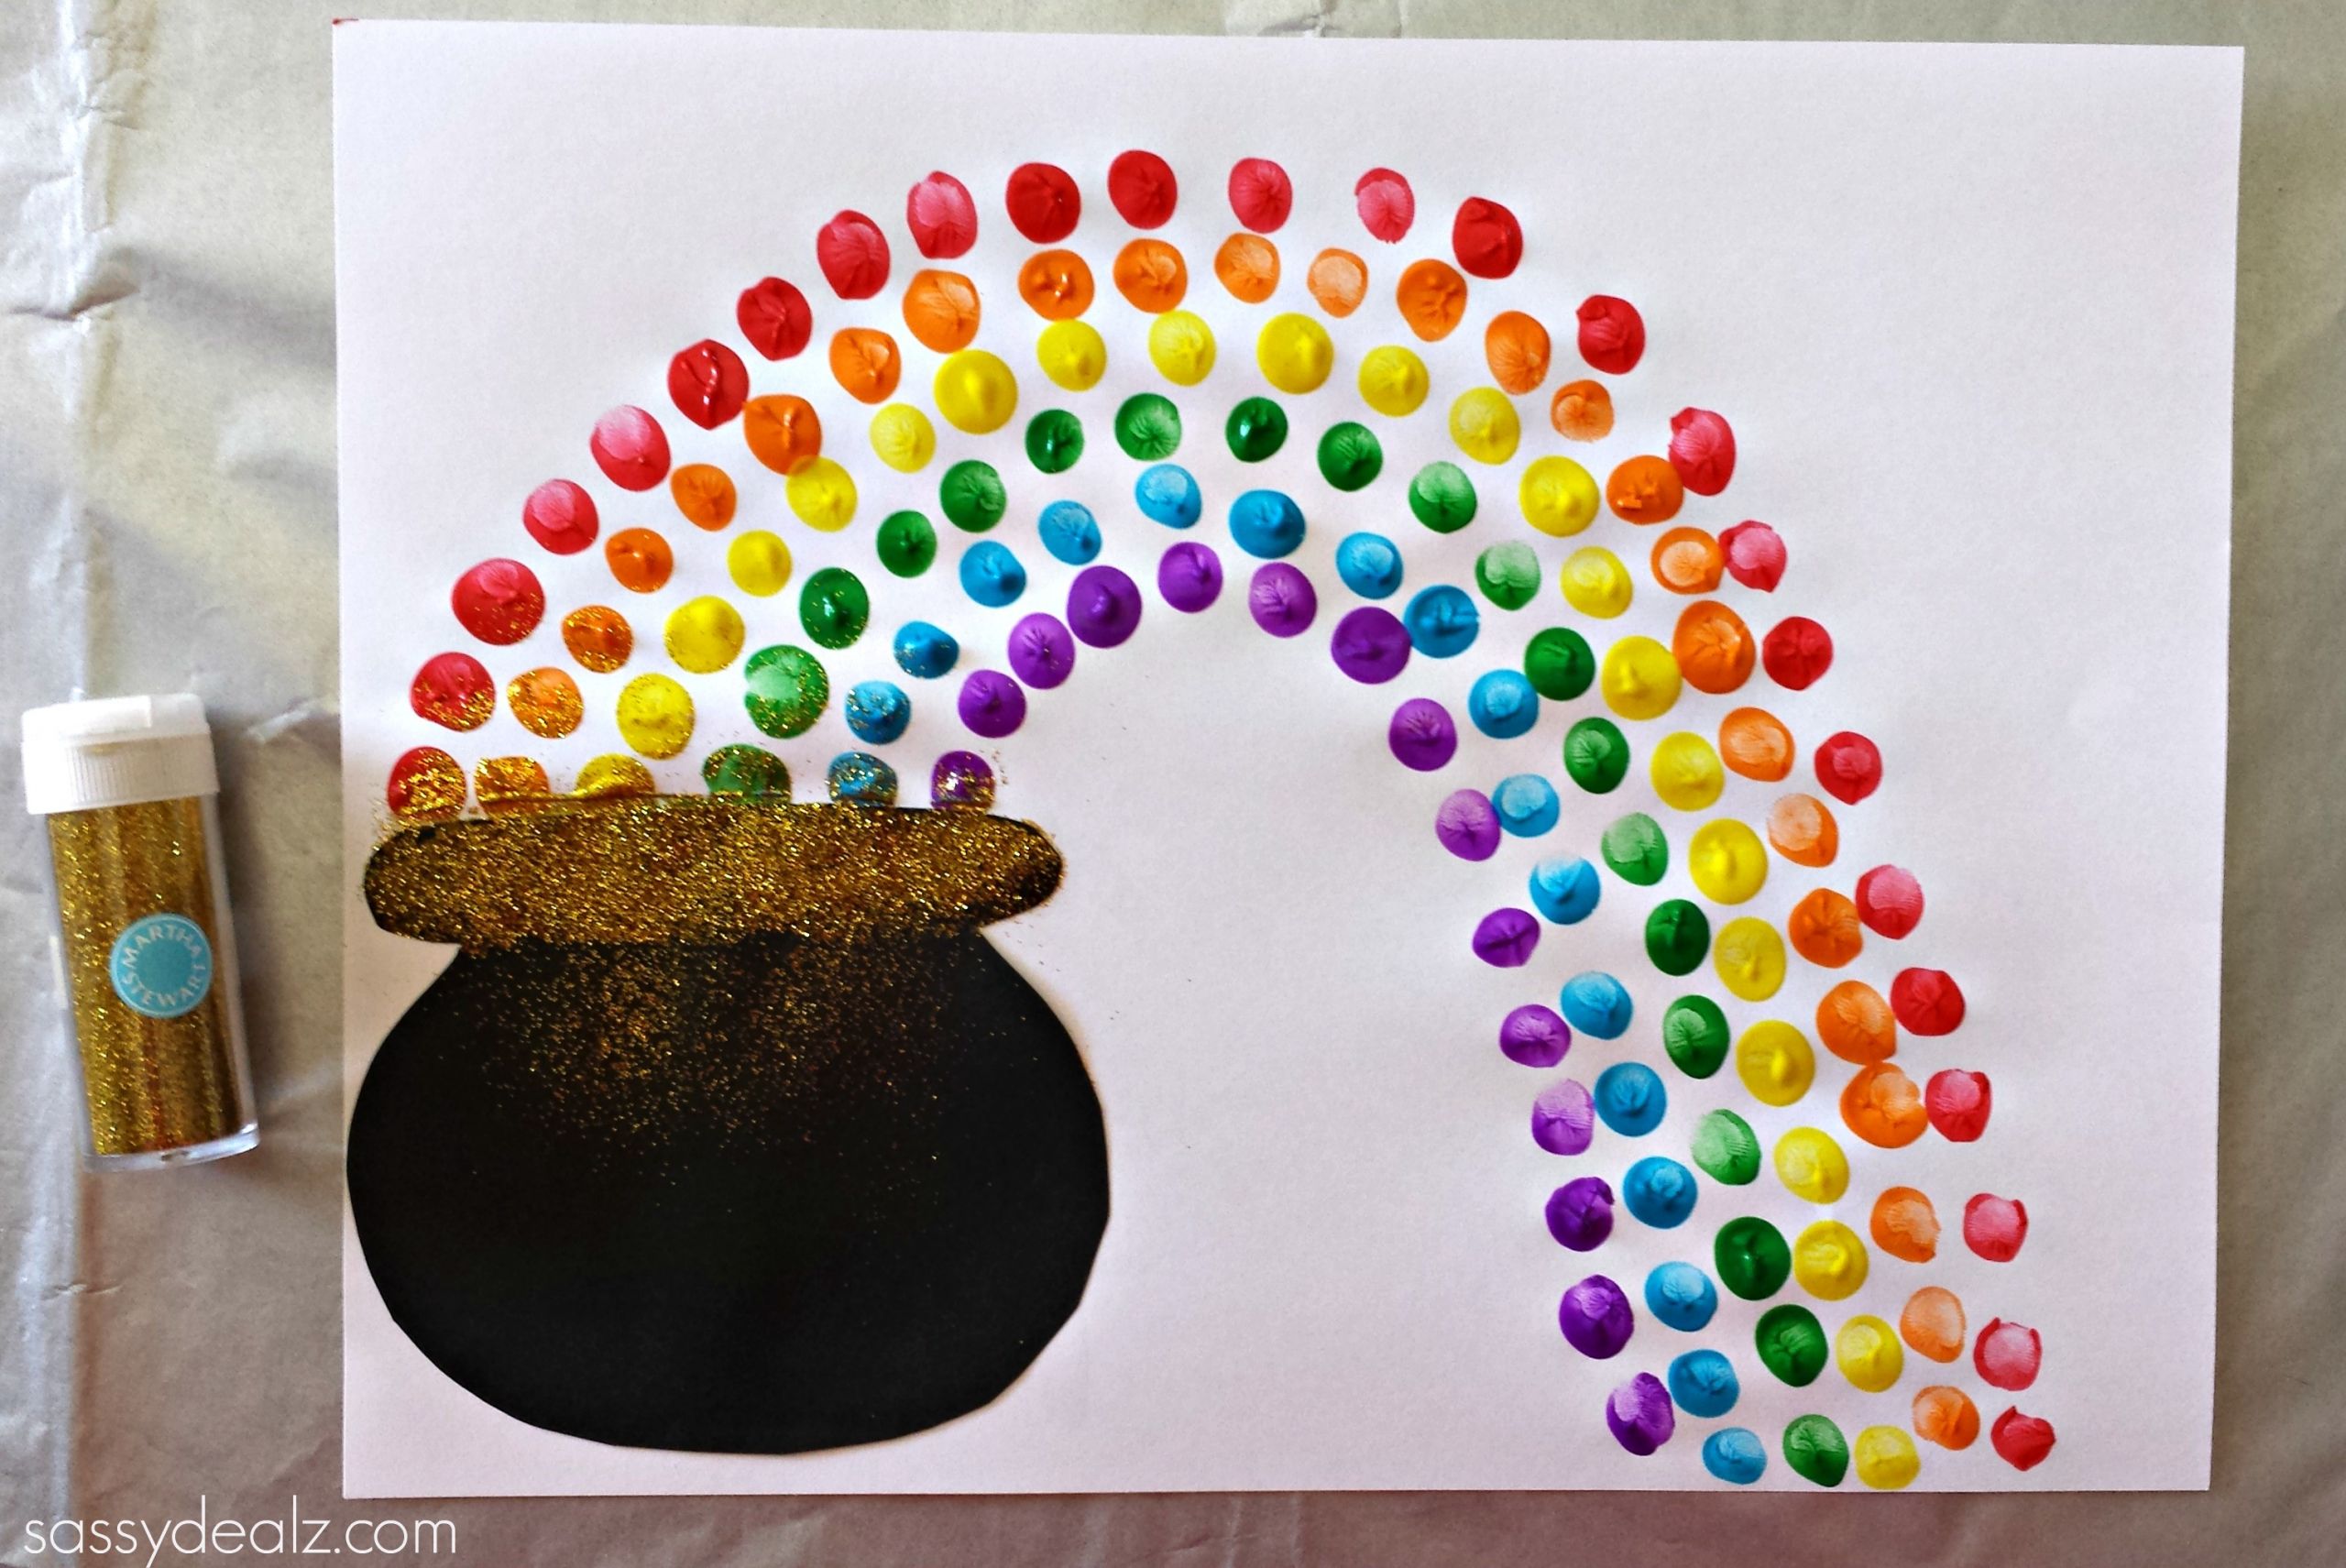 St Patrick Day Crafts
 Fingerprint Rainbow Pot of Gold Craft For St Patrick s